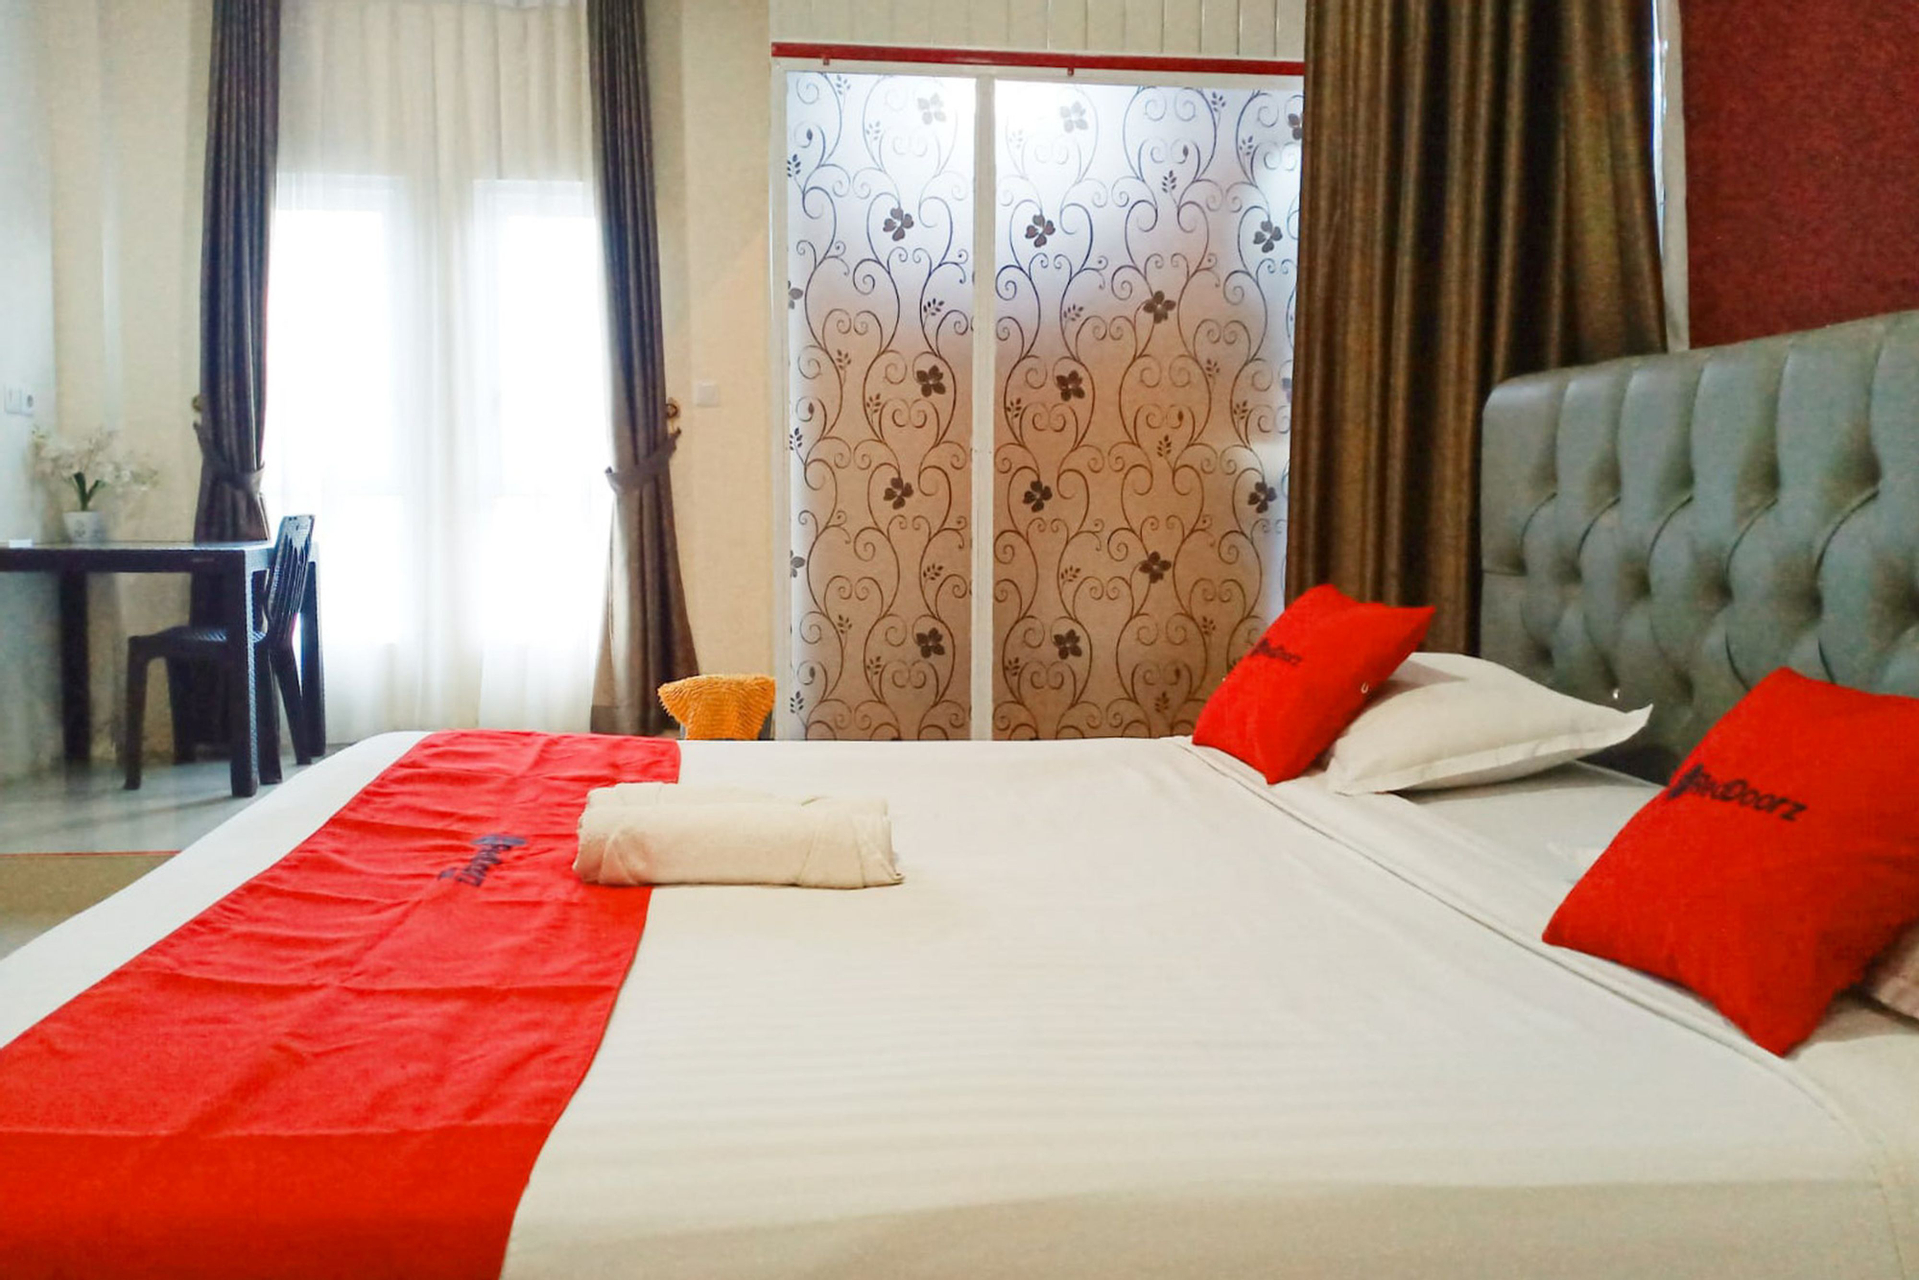 Bedroom 3, RedDoorz Syariah near Minangkabau International Airport, Padang Pariaman